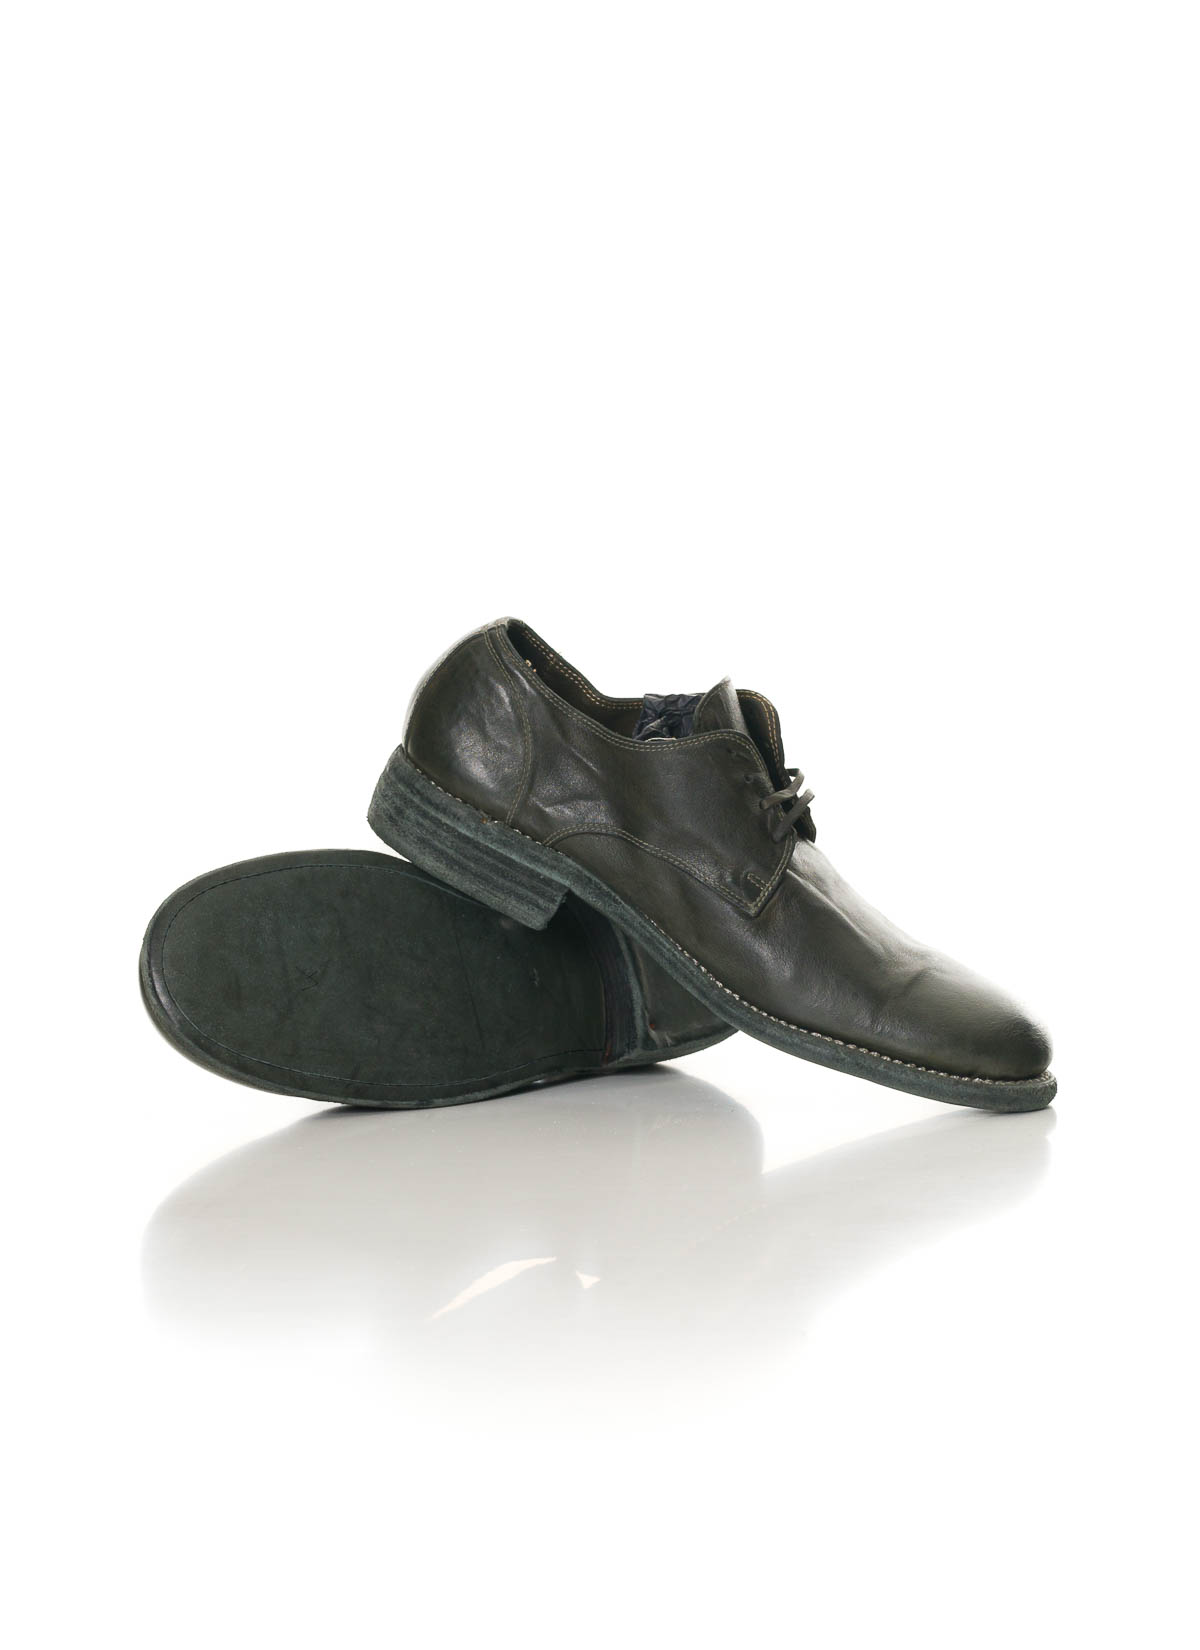 hide-m | GUIDI 992, Classic Derby Shoe CV31T kangaroo leather